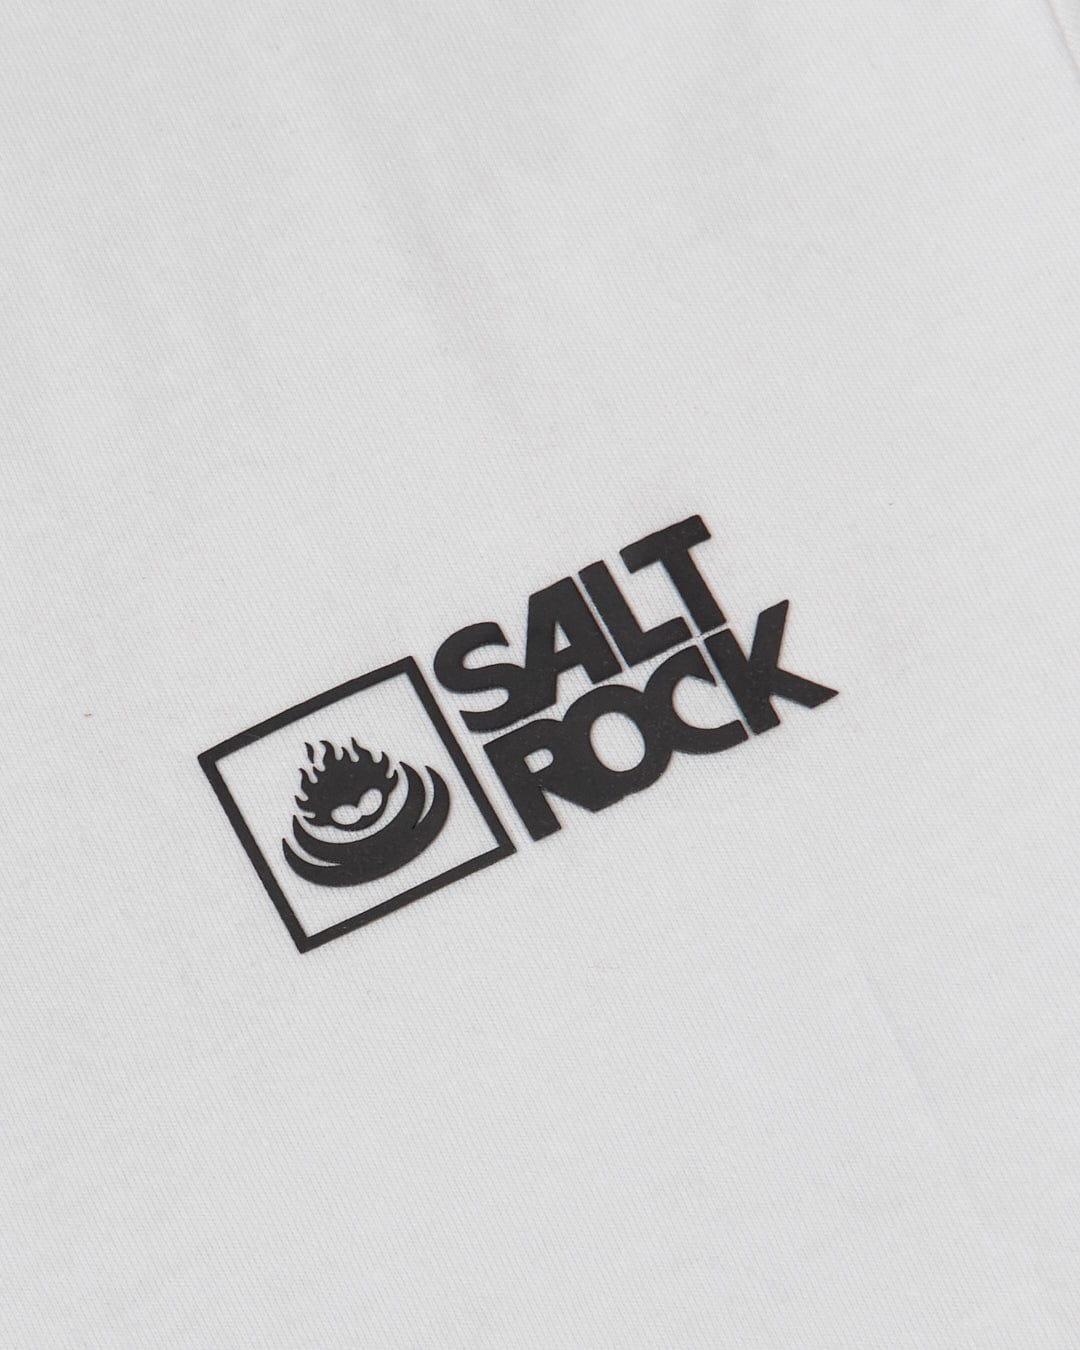 Black and grey Saltrock branding logo printed on the Saltrock Original - Mens Short Sleeve T-Shirt - White with a crew neckline.